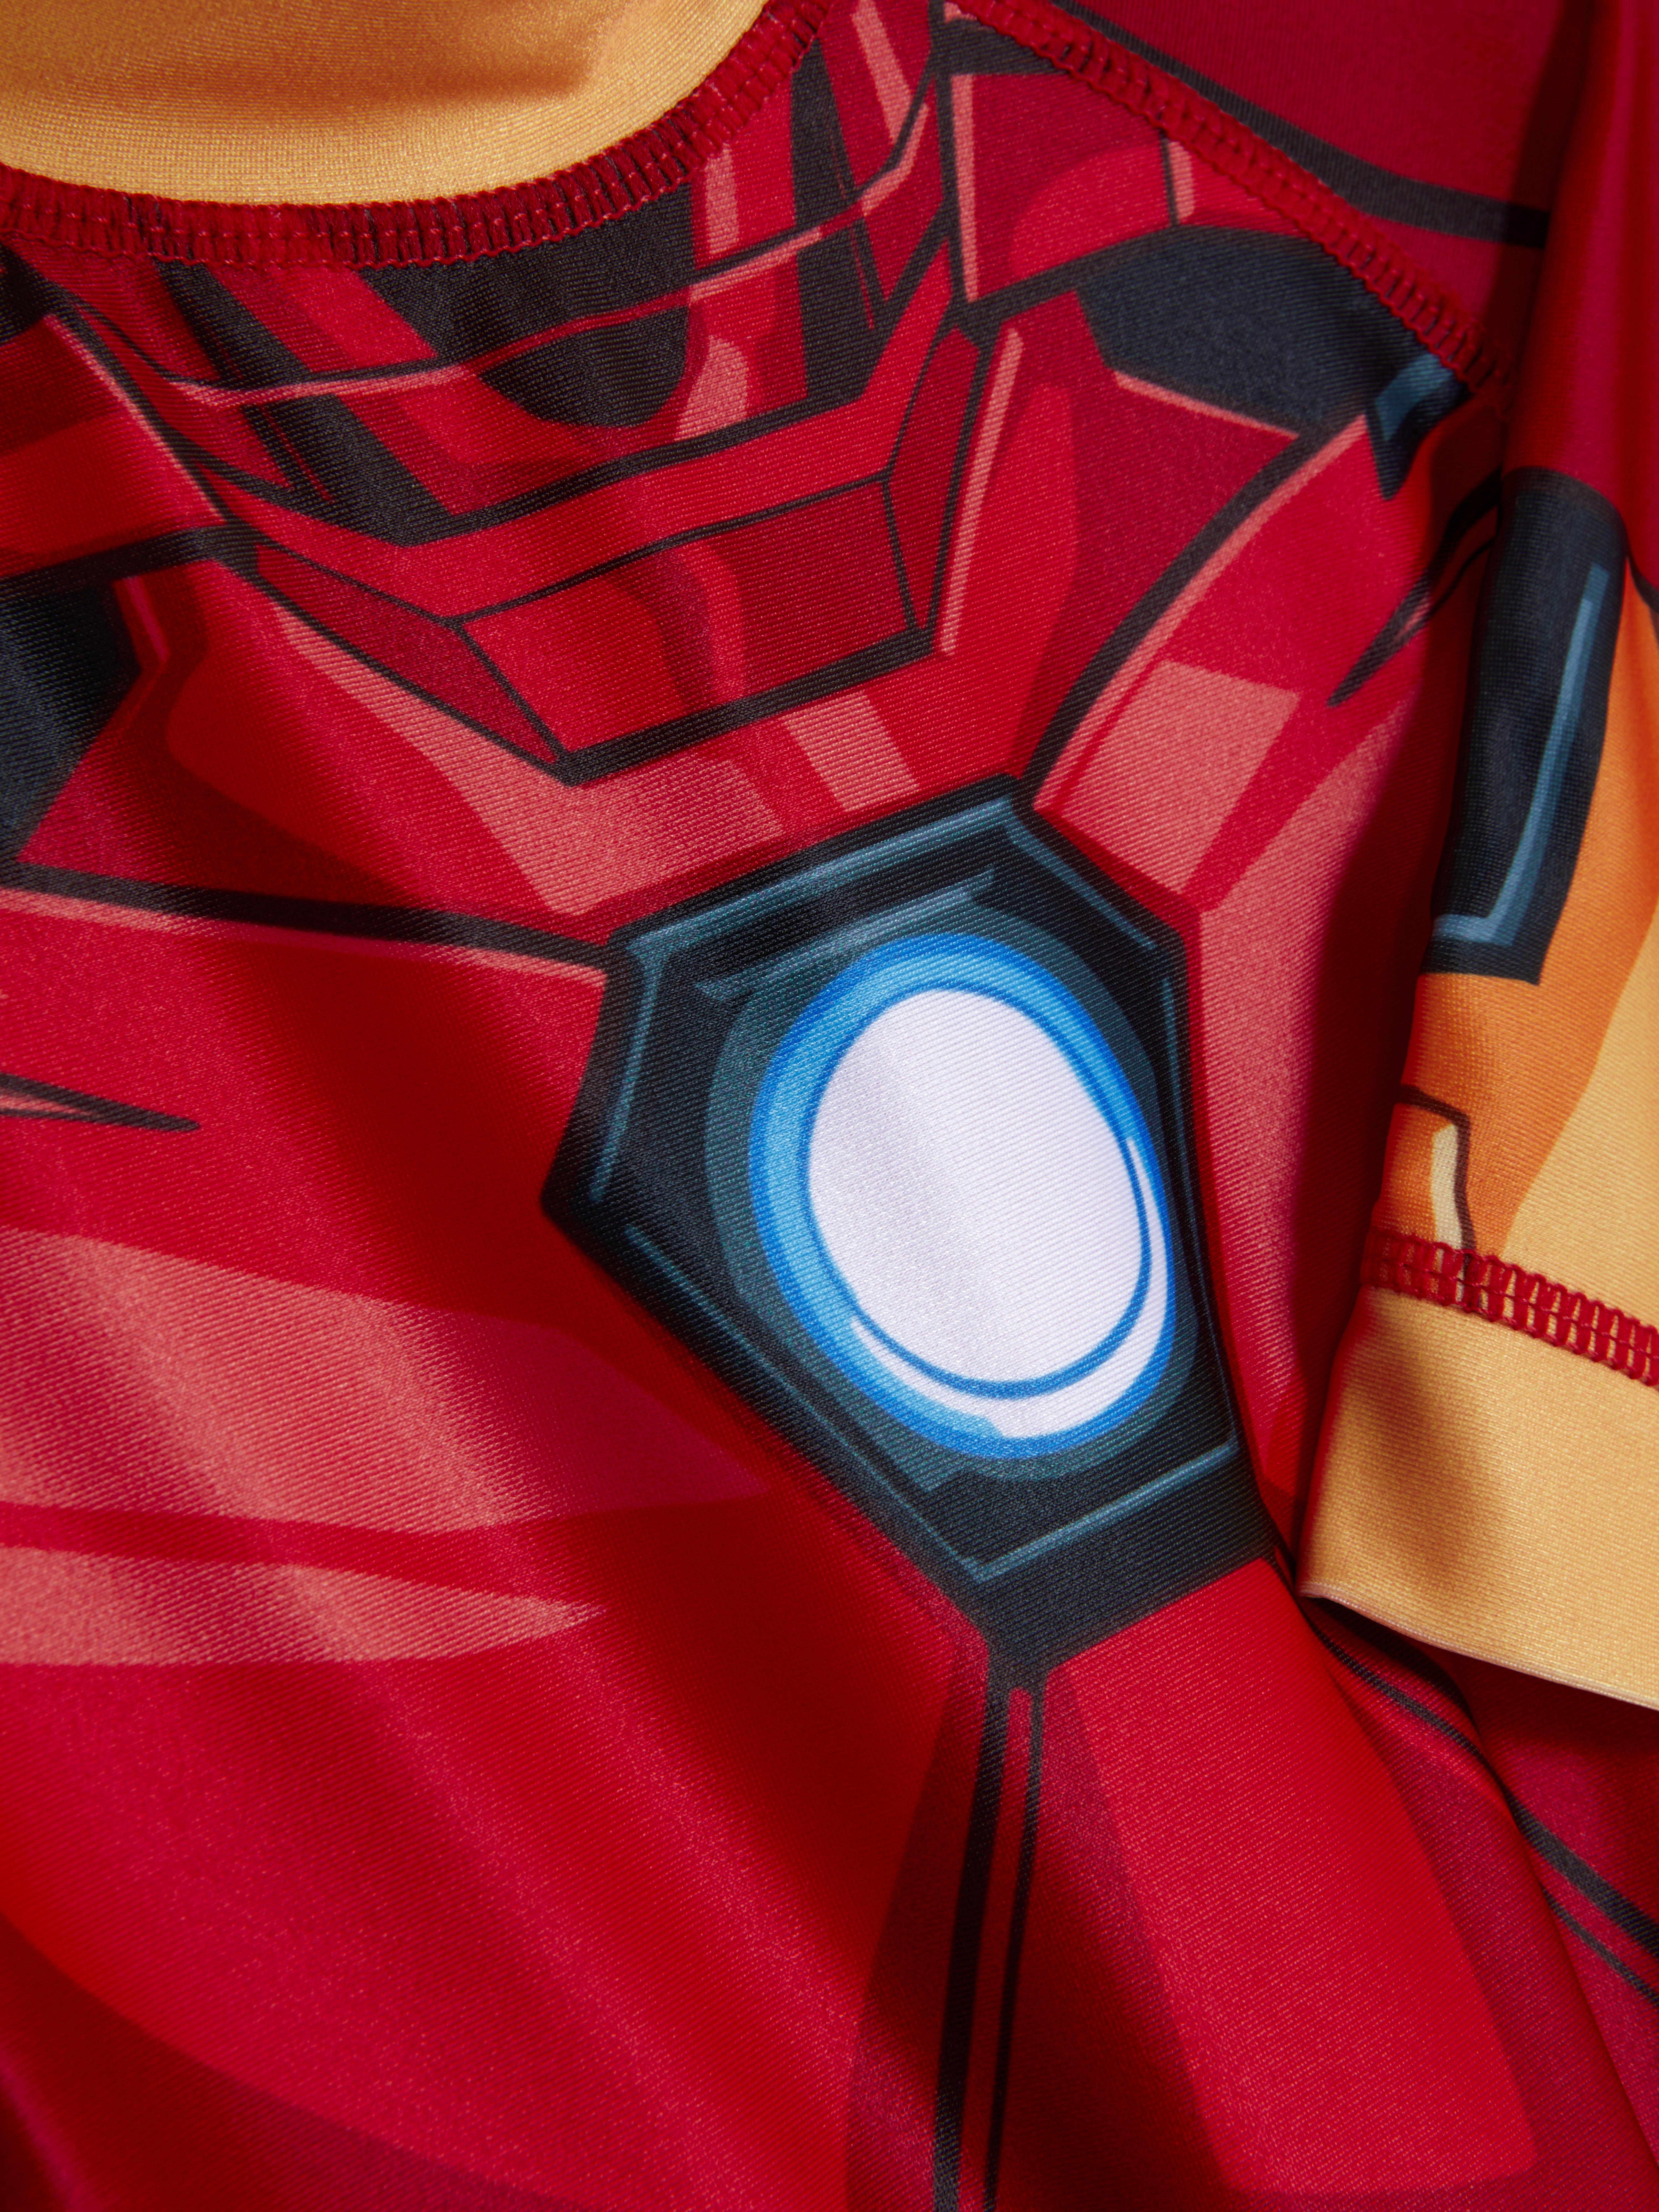 Marvel Iron Man Wetsuit